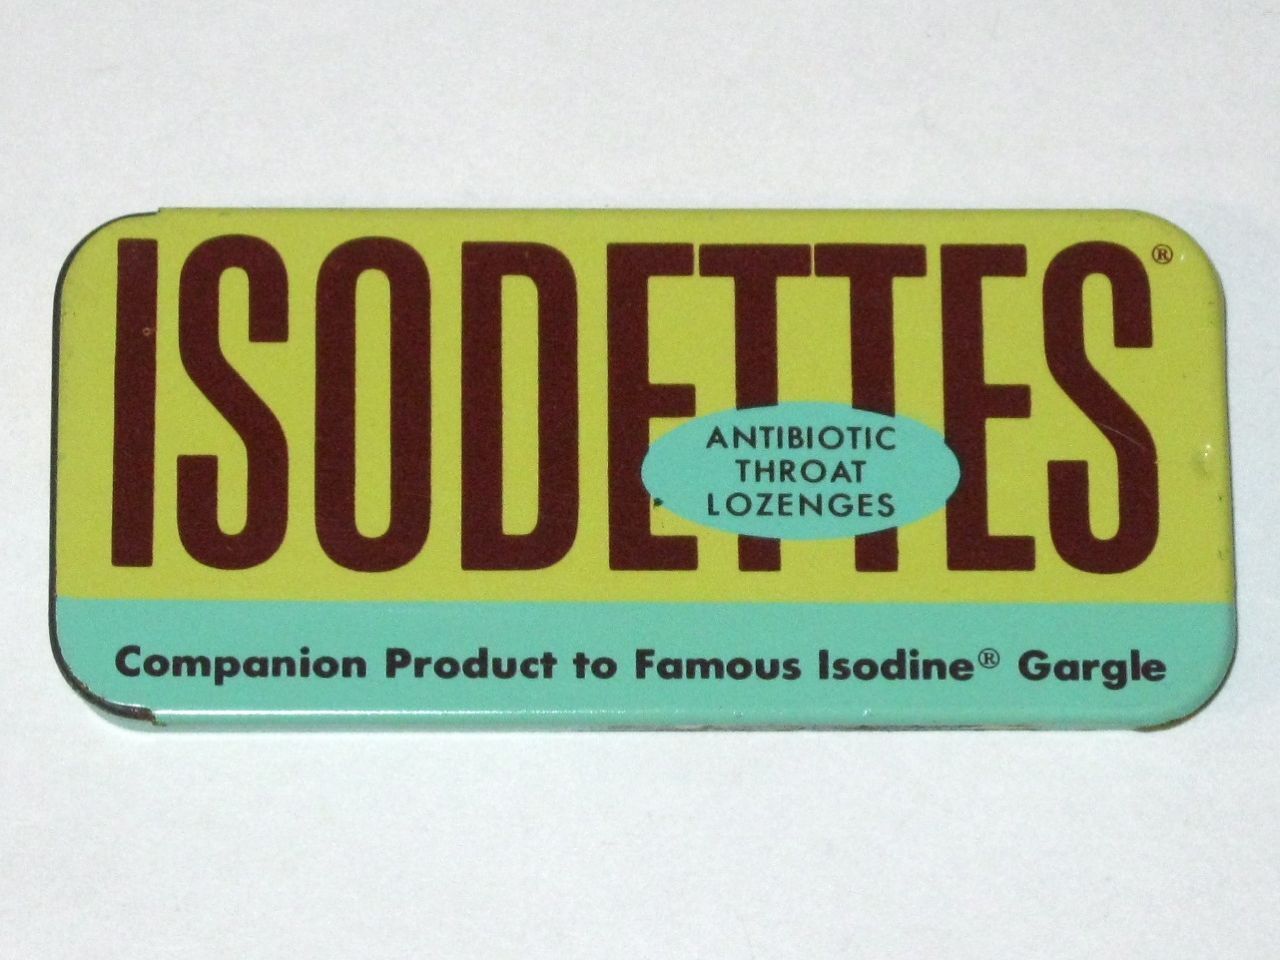 Vintage 1960s ISODETTES Antibiotic Throat LOZENGES Advertising TIN Slide Top